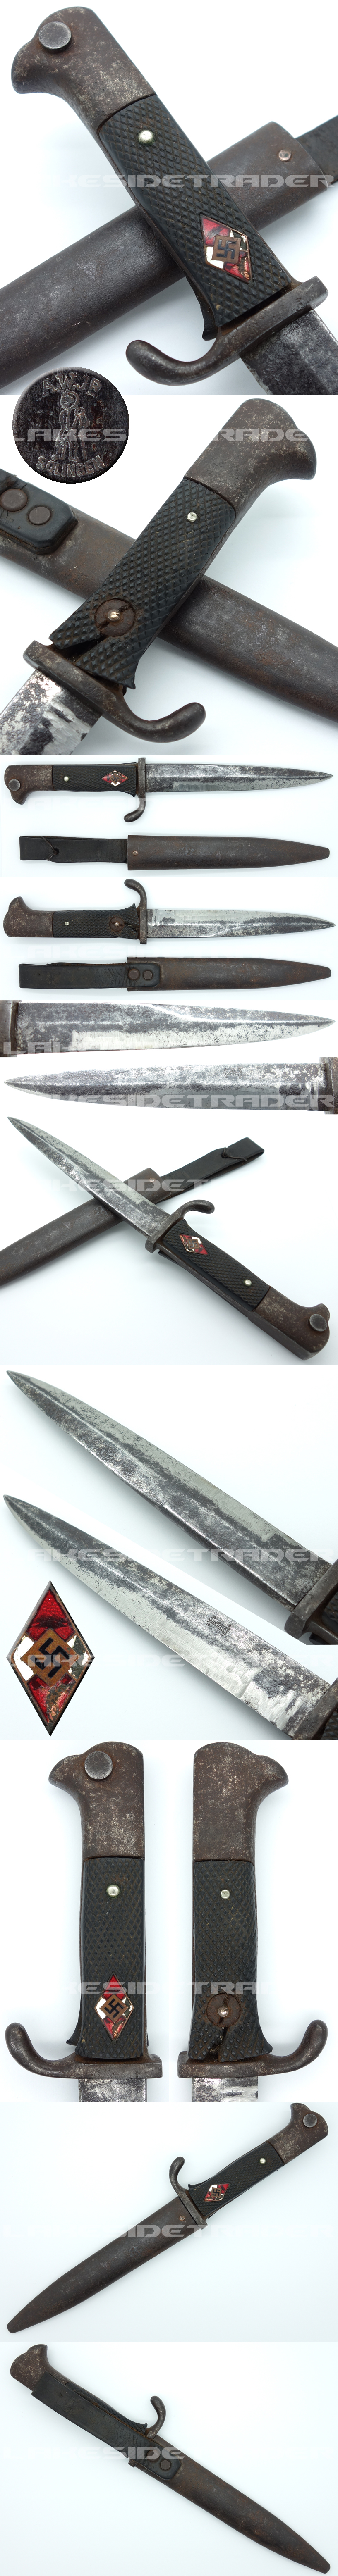 Earliest Hitler Youth Knife by A.W.Jr